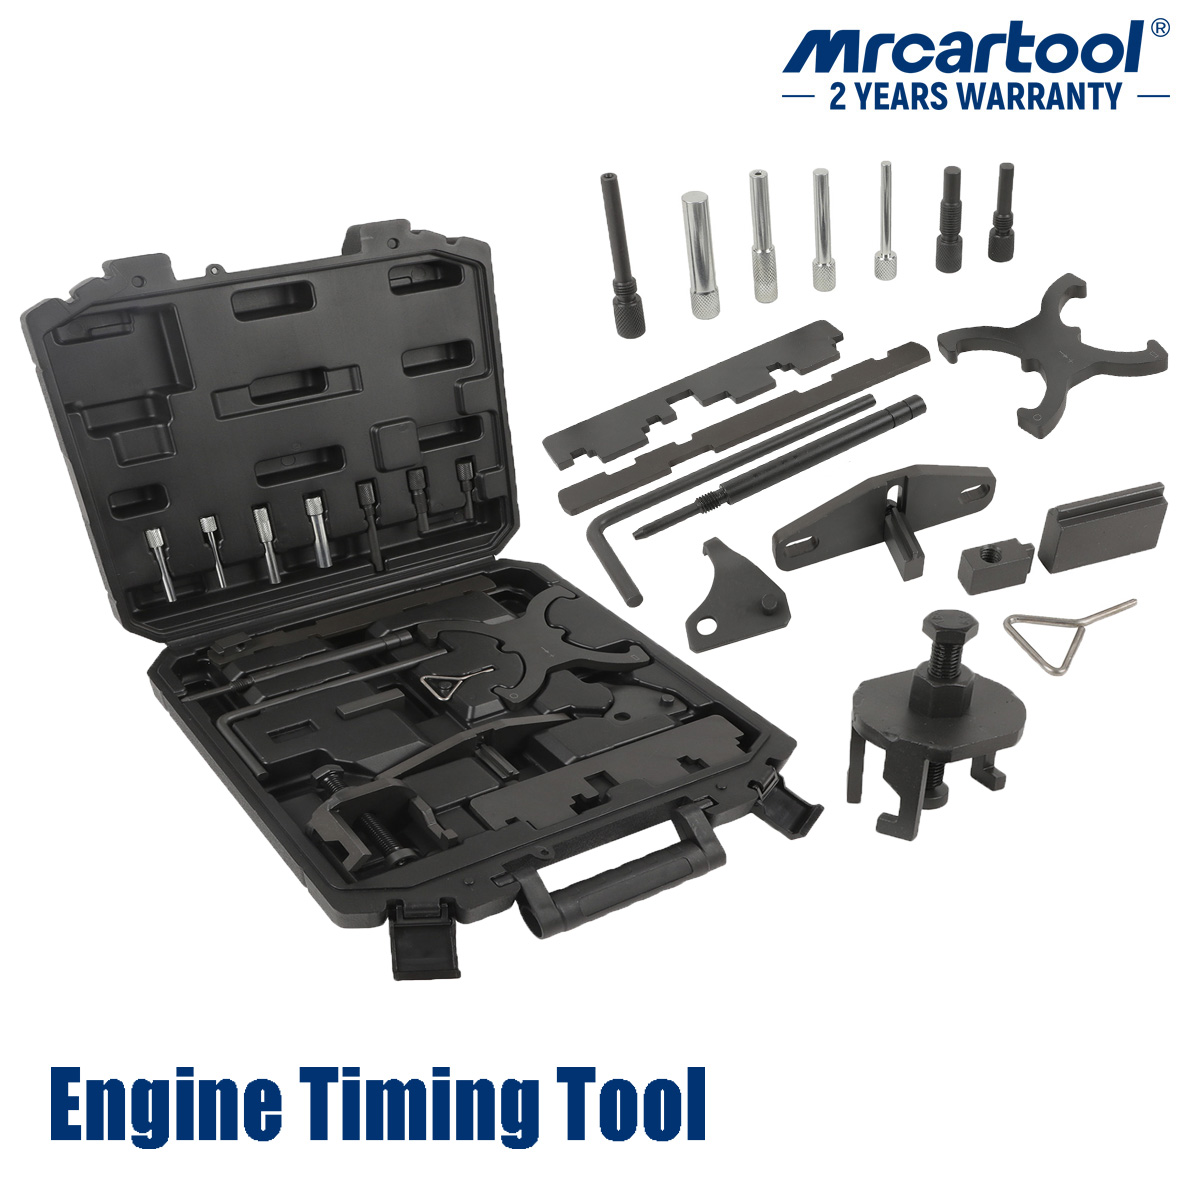 Mrcartool Engine Timing Tool Camshaft Alignment Flywheel Locking Tool Kit  for Ford Focus Mazda 16V 1.4 1.6 1.8 2.0 Di/TDCi/TDDi Engines - Walmart.com